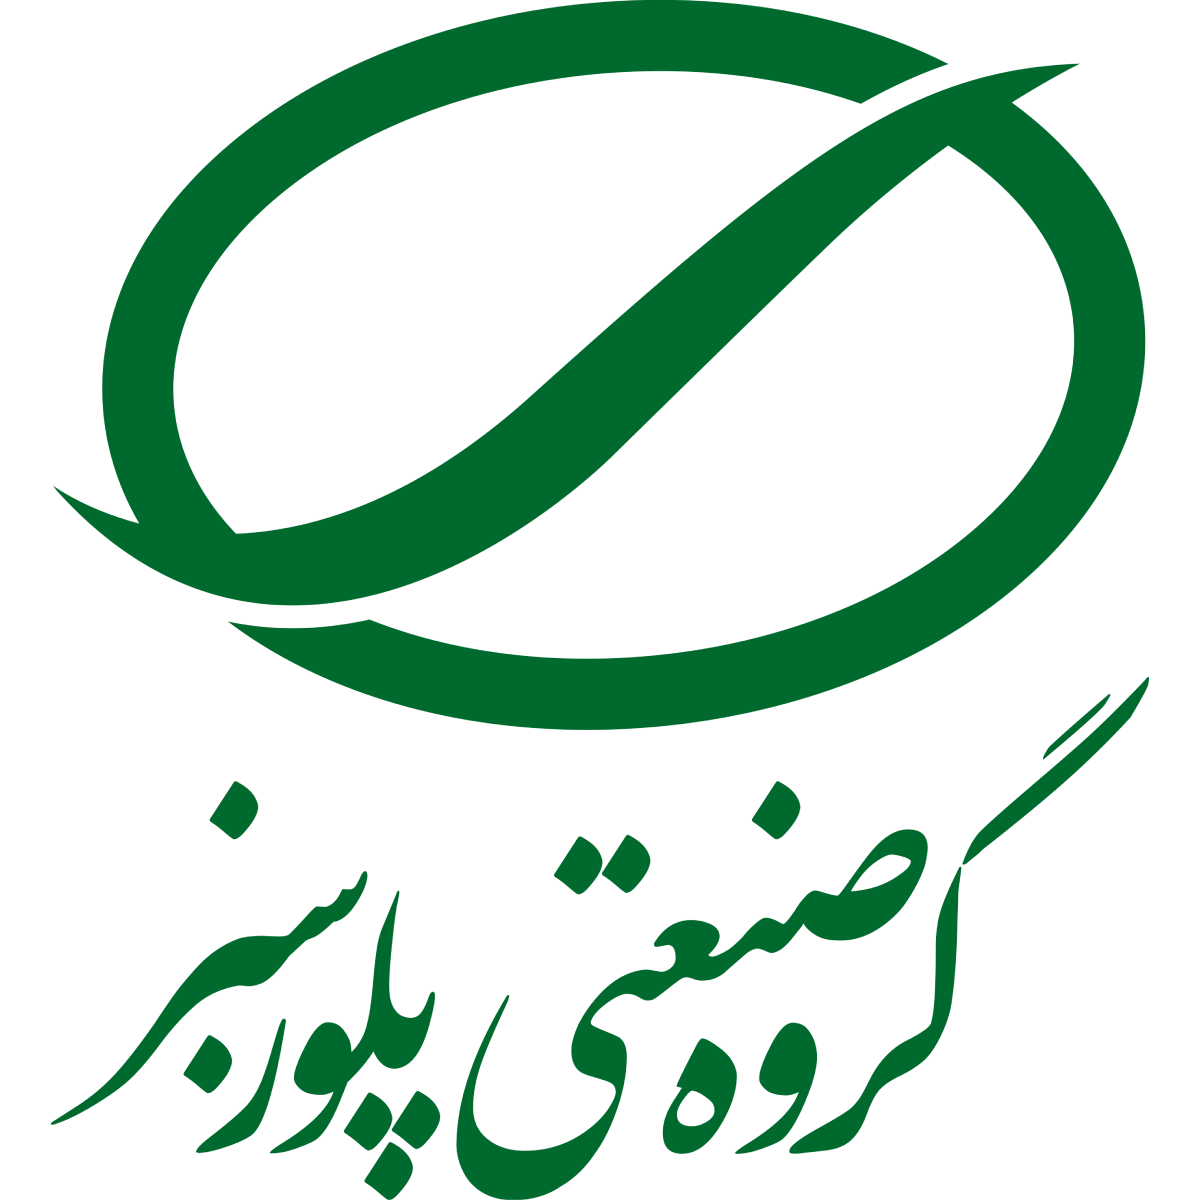 Green Polour Industrial Group – Logo (1) (1)